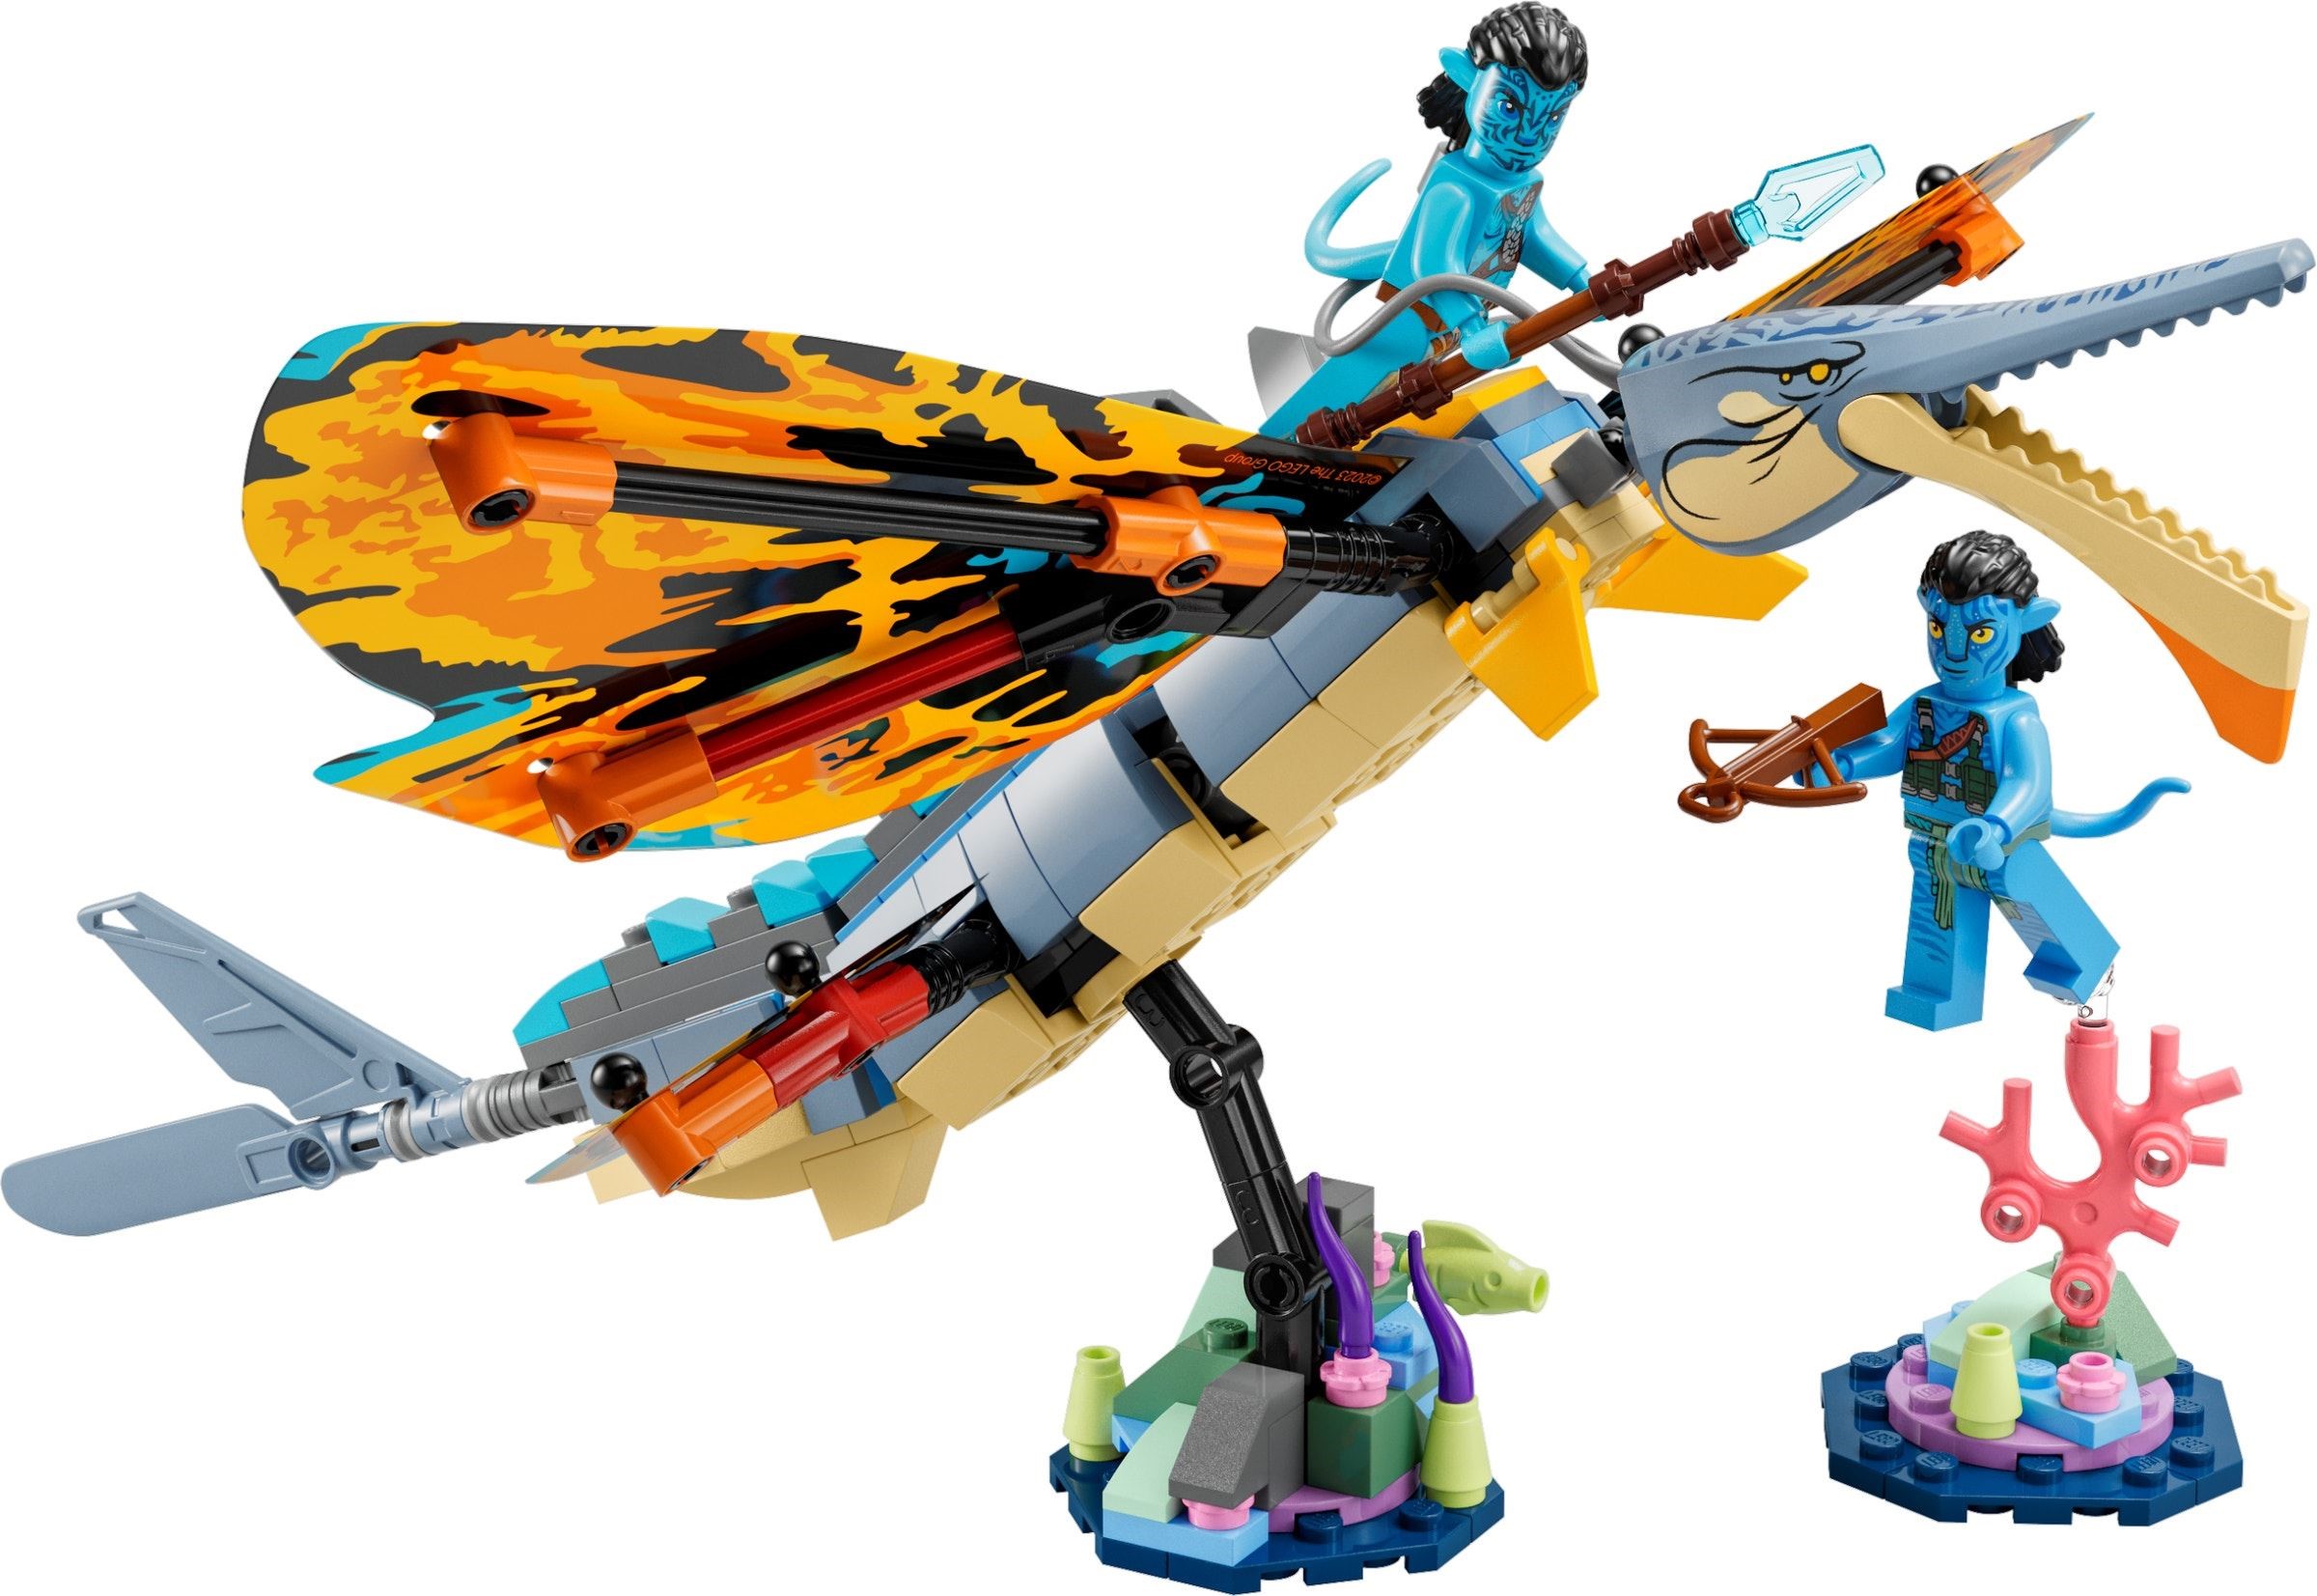 Every new 2023 LEGO Avatar Minifigure